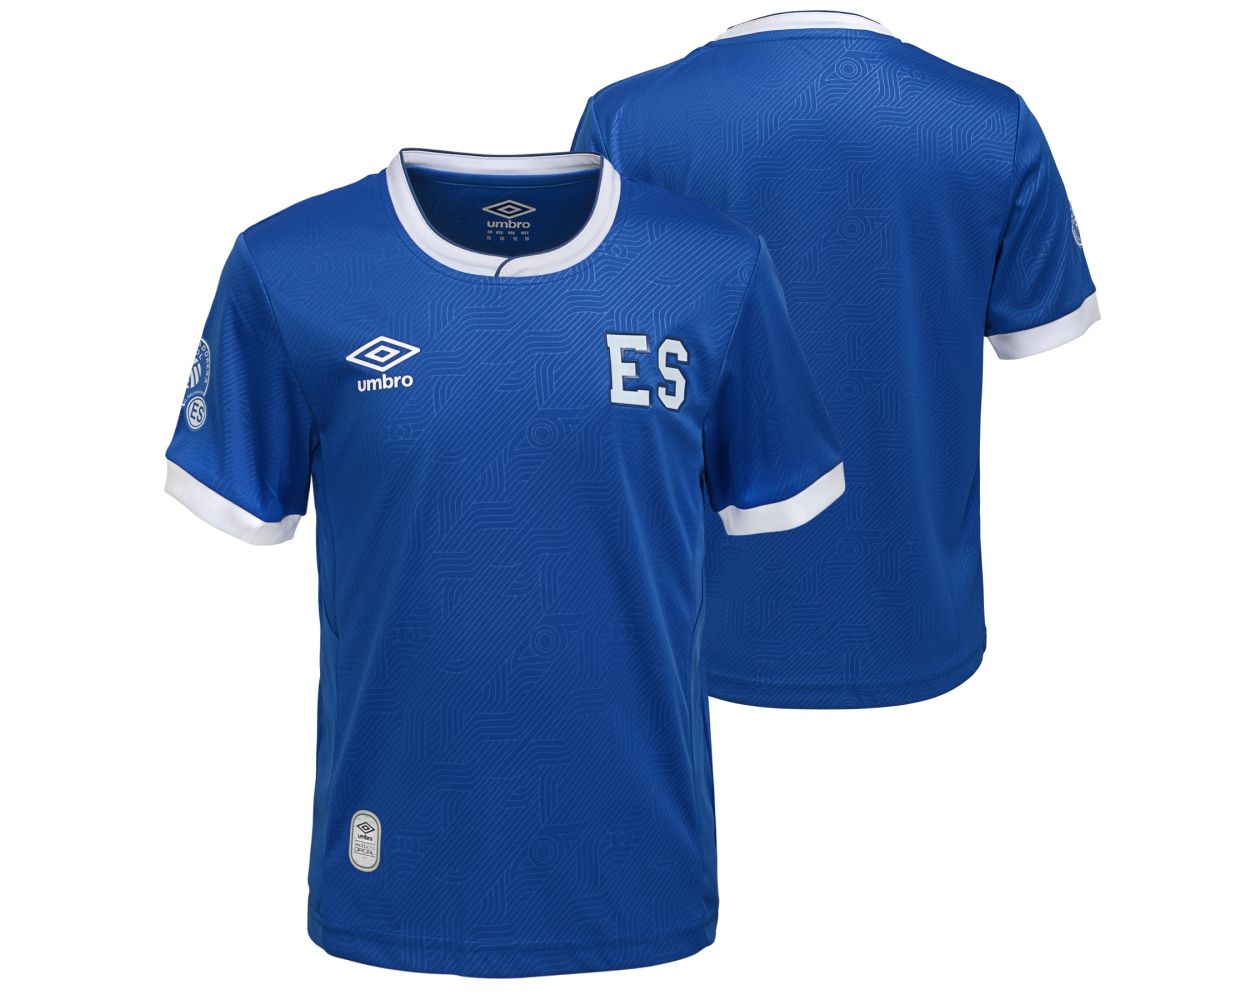 Umbro El Salvador Home jersey short sleeve 2019/20 Blue